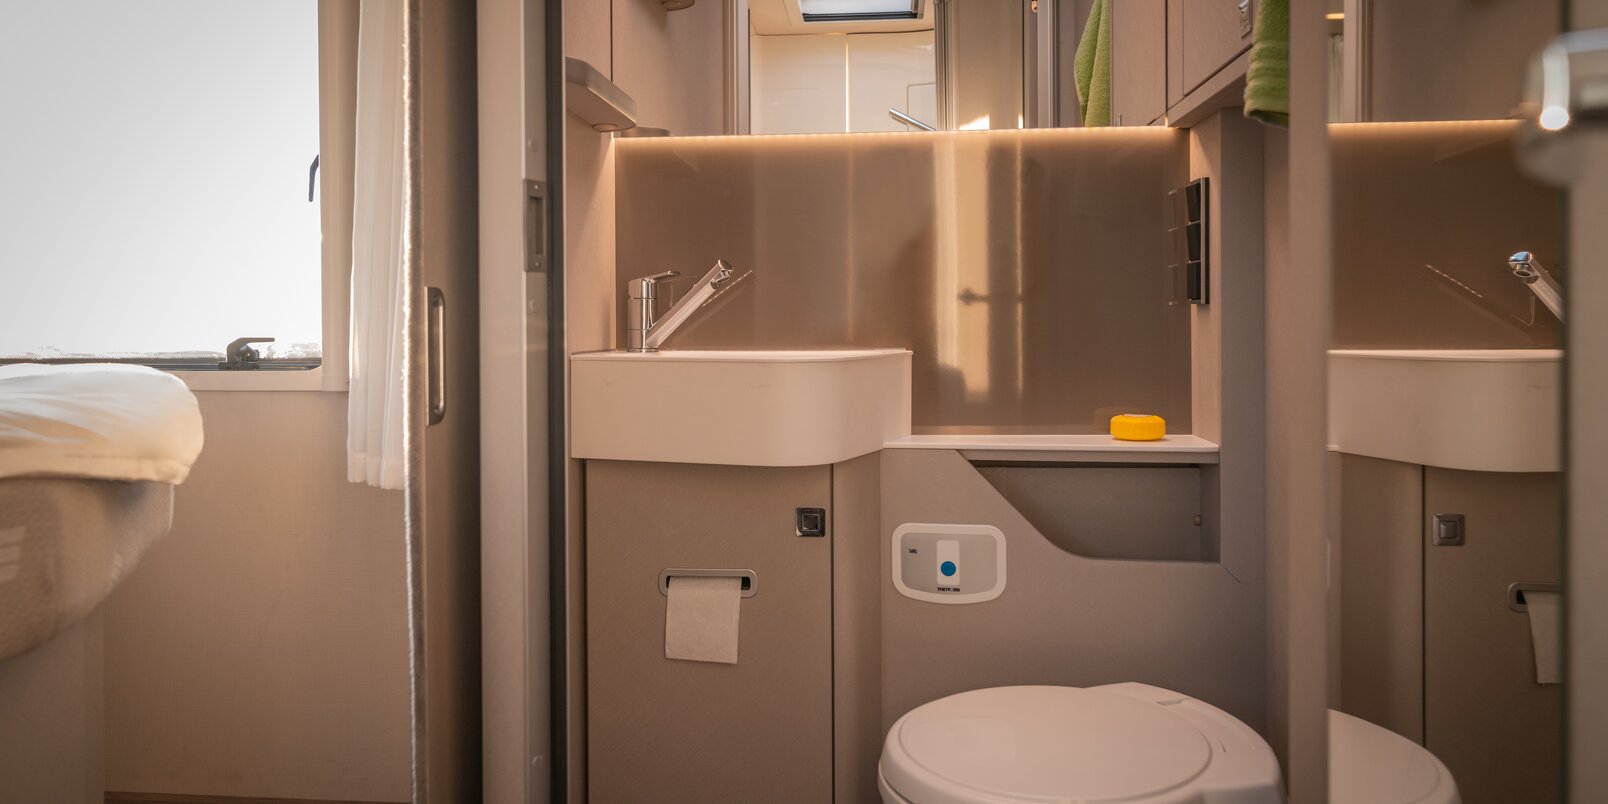 Spiegel, wastafel, opbergruimte en toilet in de badkamer van de HYMER Tramp S camper